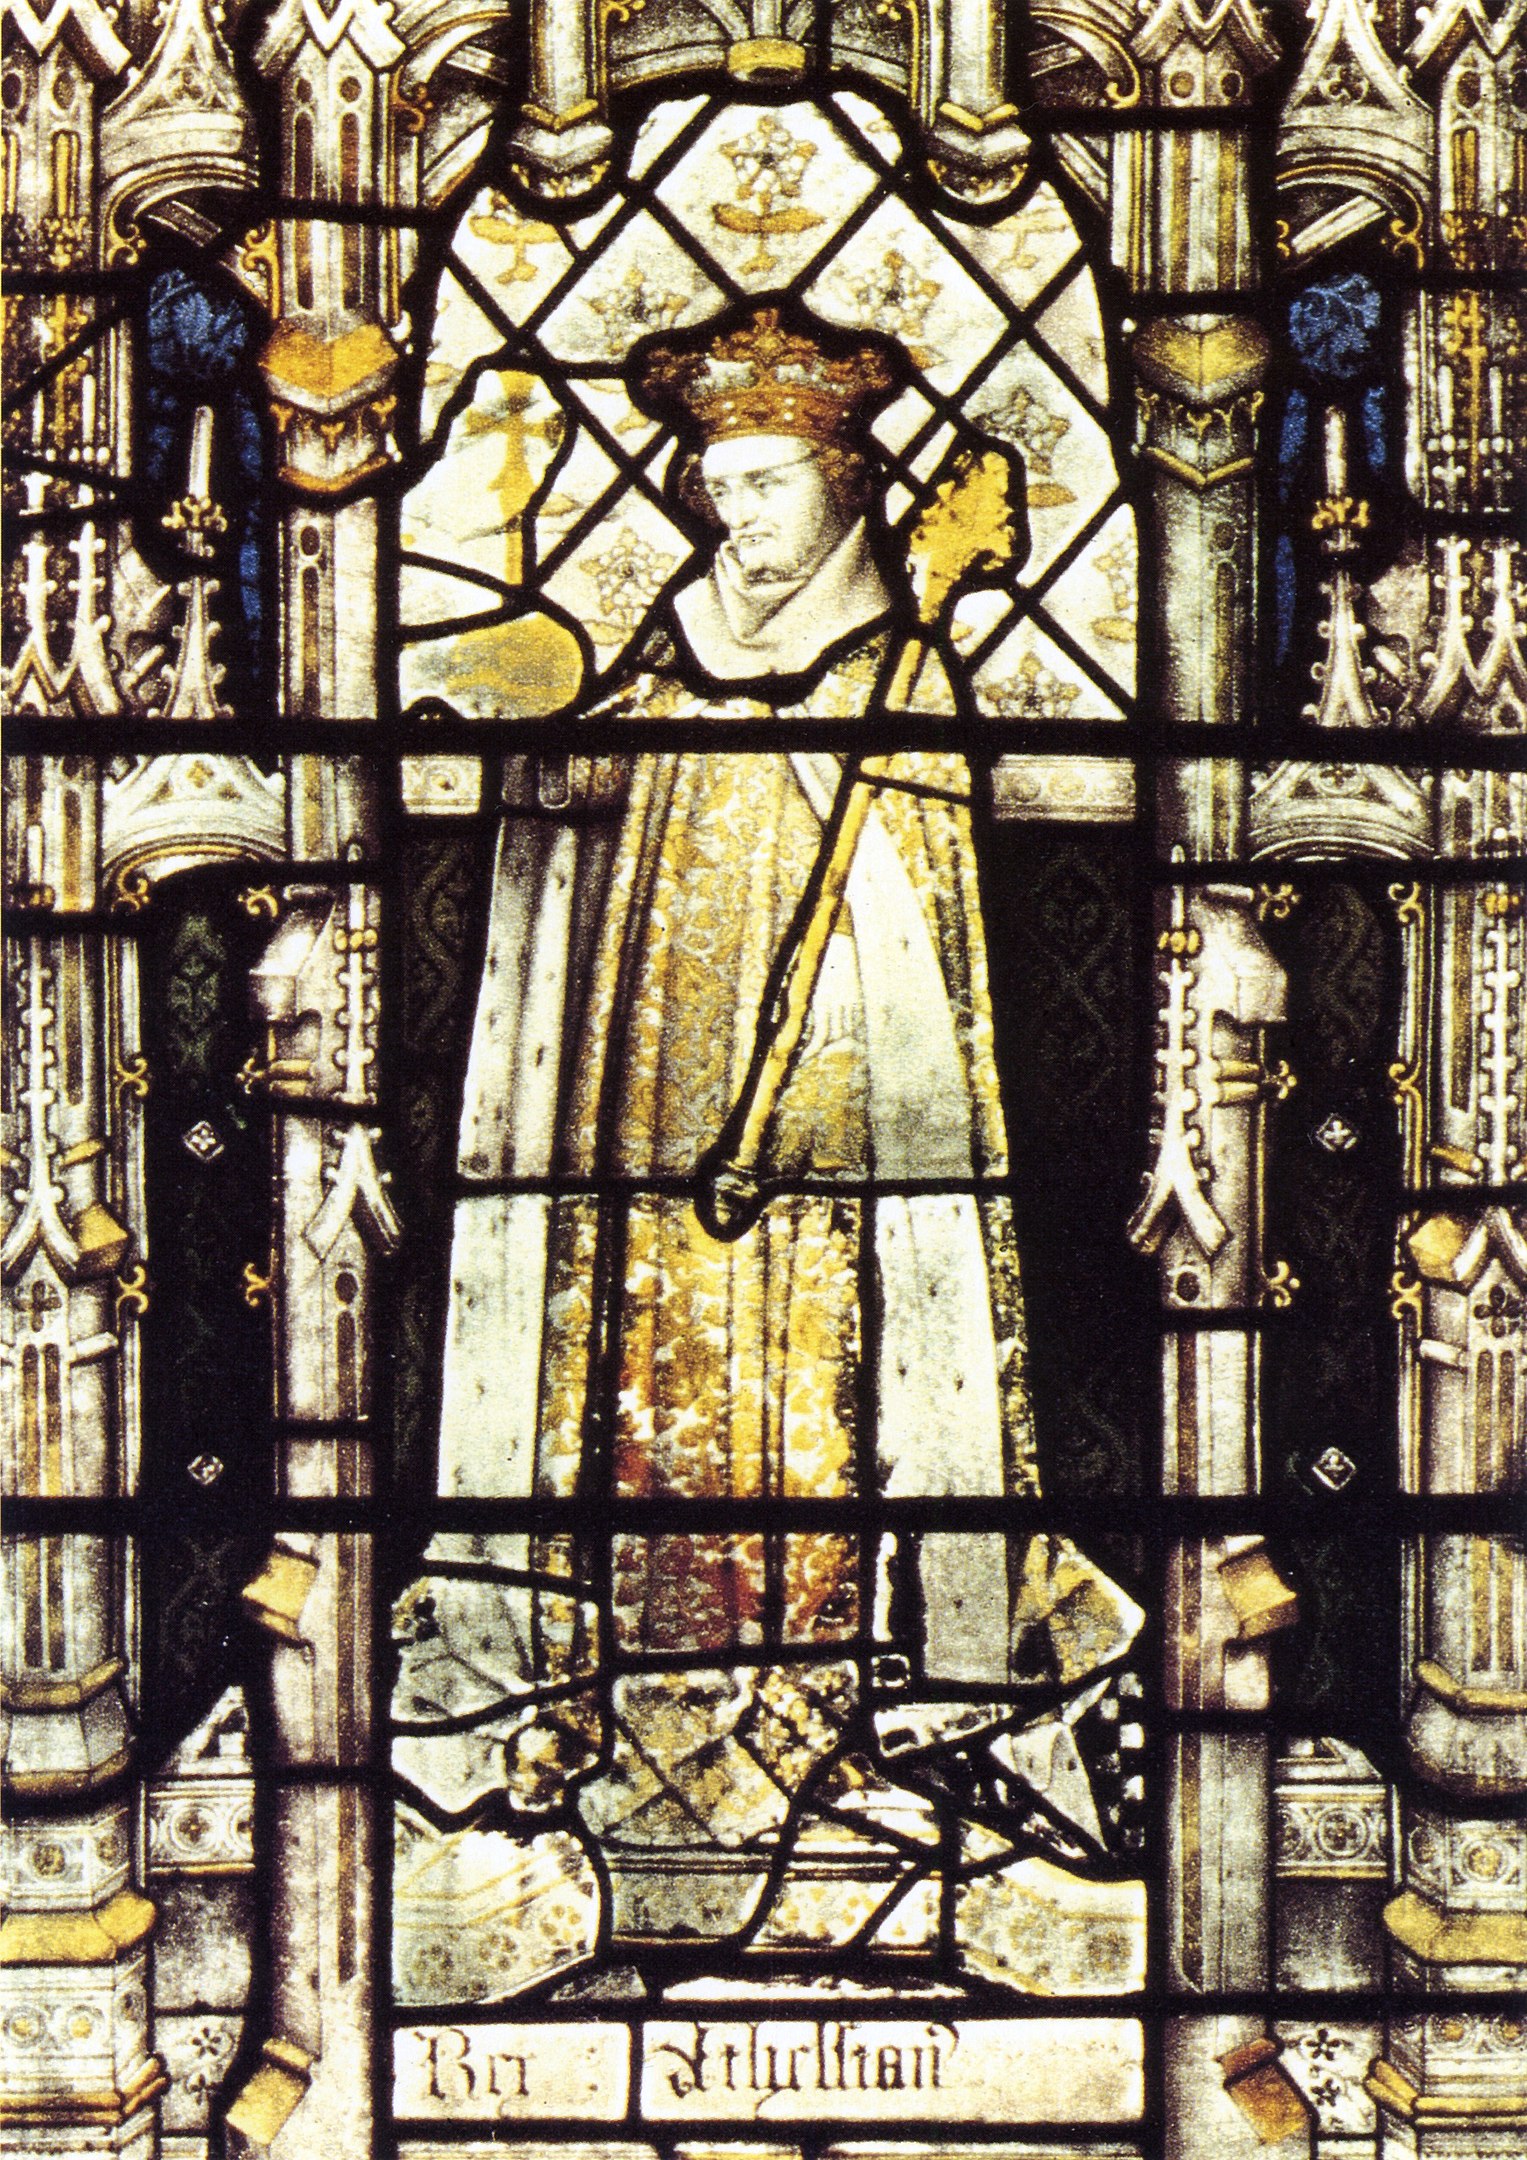 Muore Athelstan, primo re d’Inghilterra